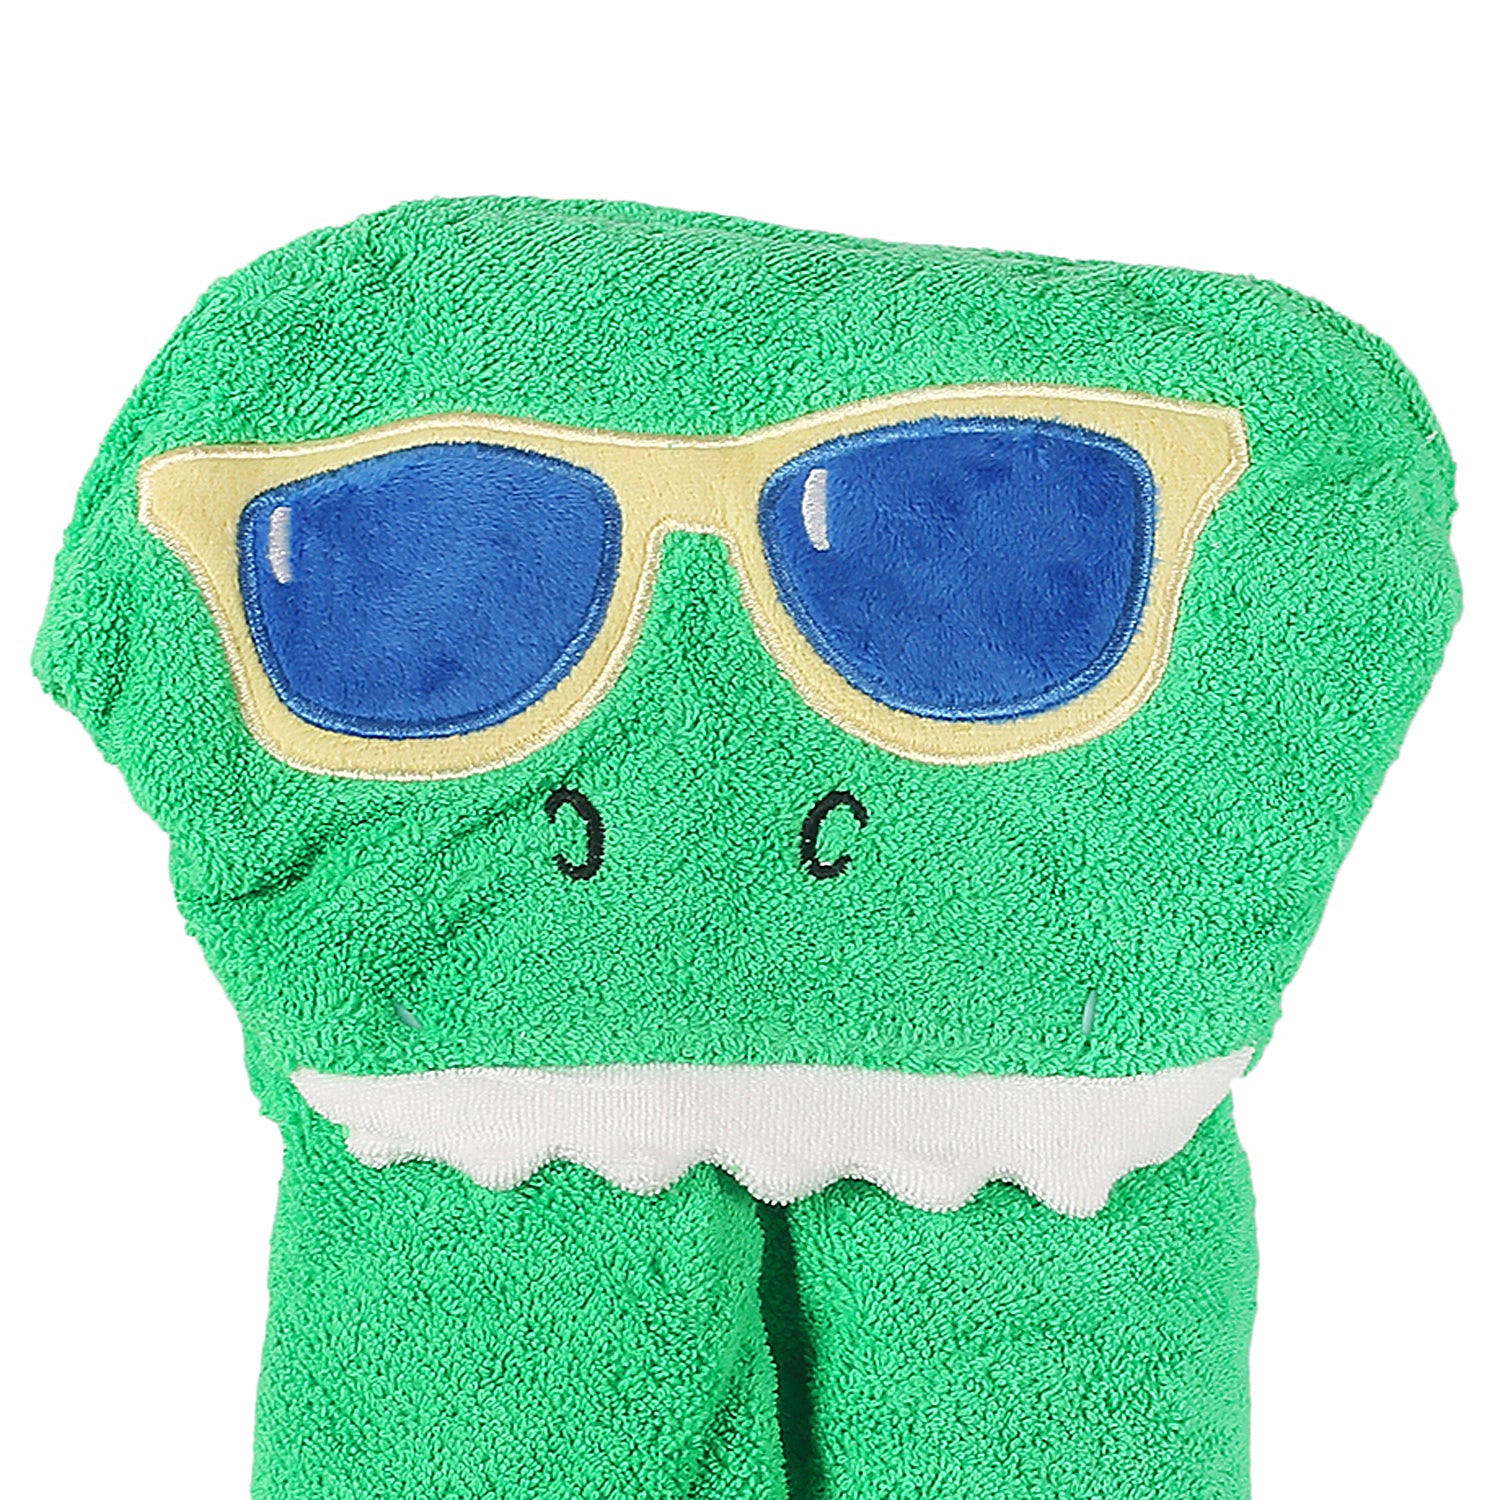 Smart And Nerdy Dark Green Hooded Towel - Baby Moo